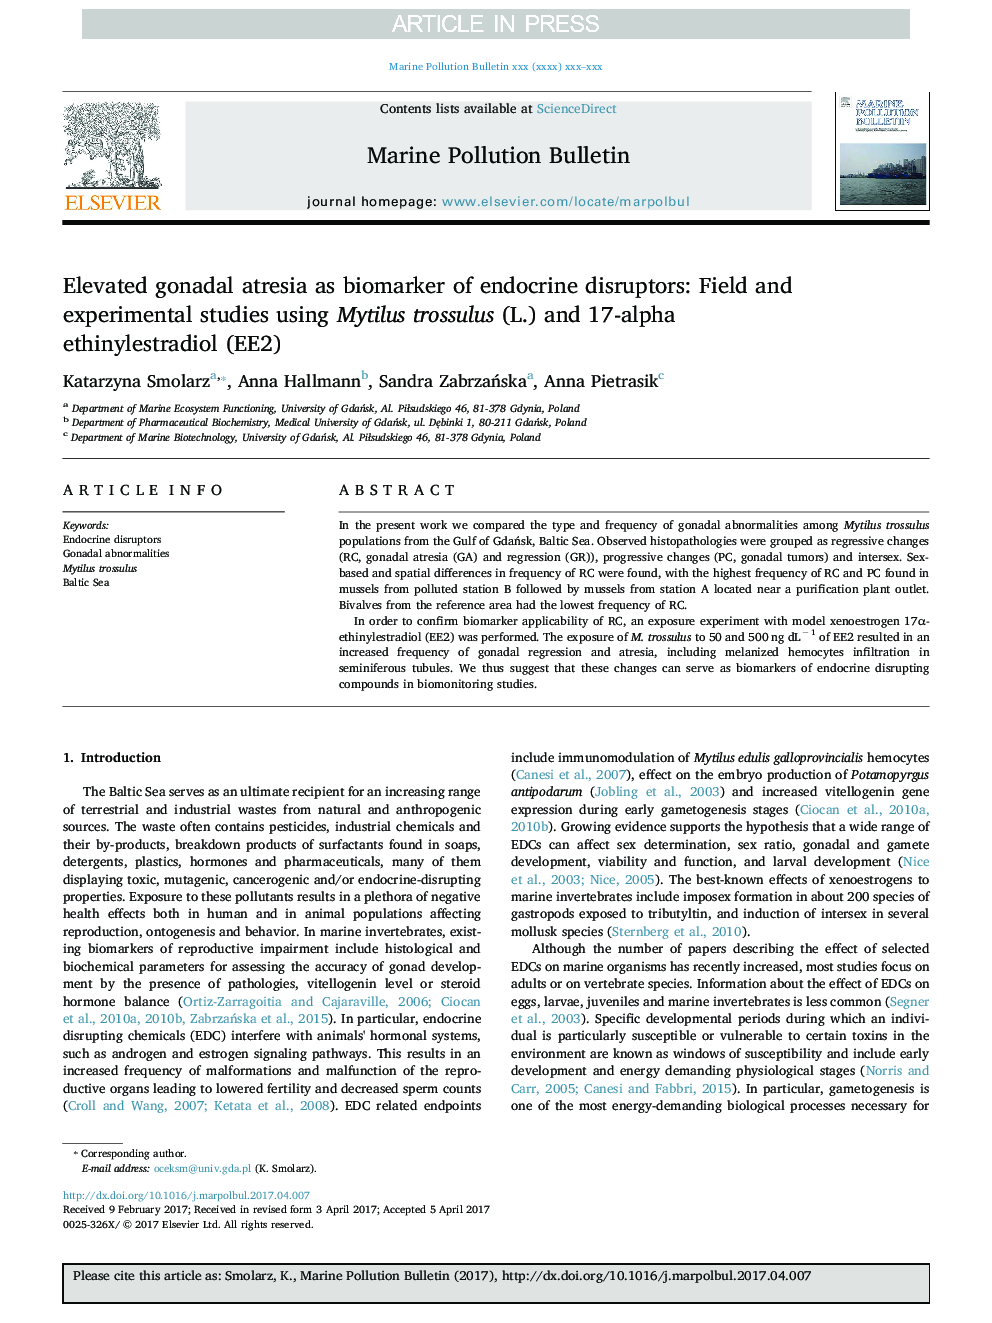 Elevated gonadal atresia as biomarker of endocrine disruptors: Field and experimental studies using Mytilus trossulus (L.) and 17-alpha ethinylestradiol (EE2)